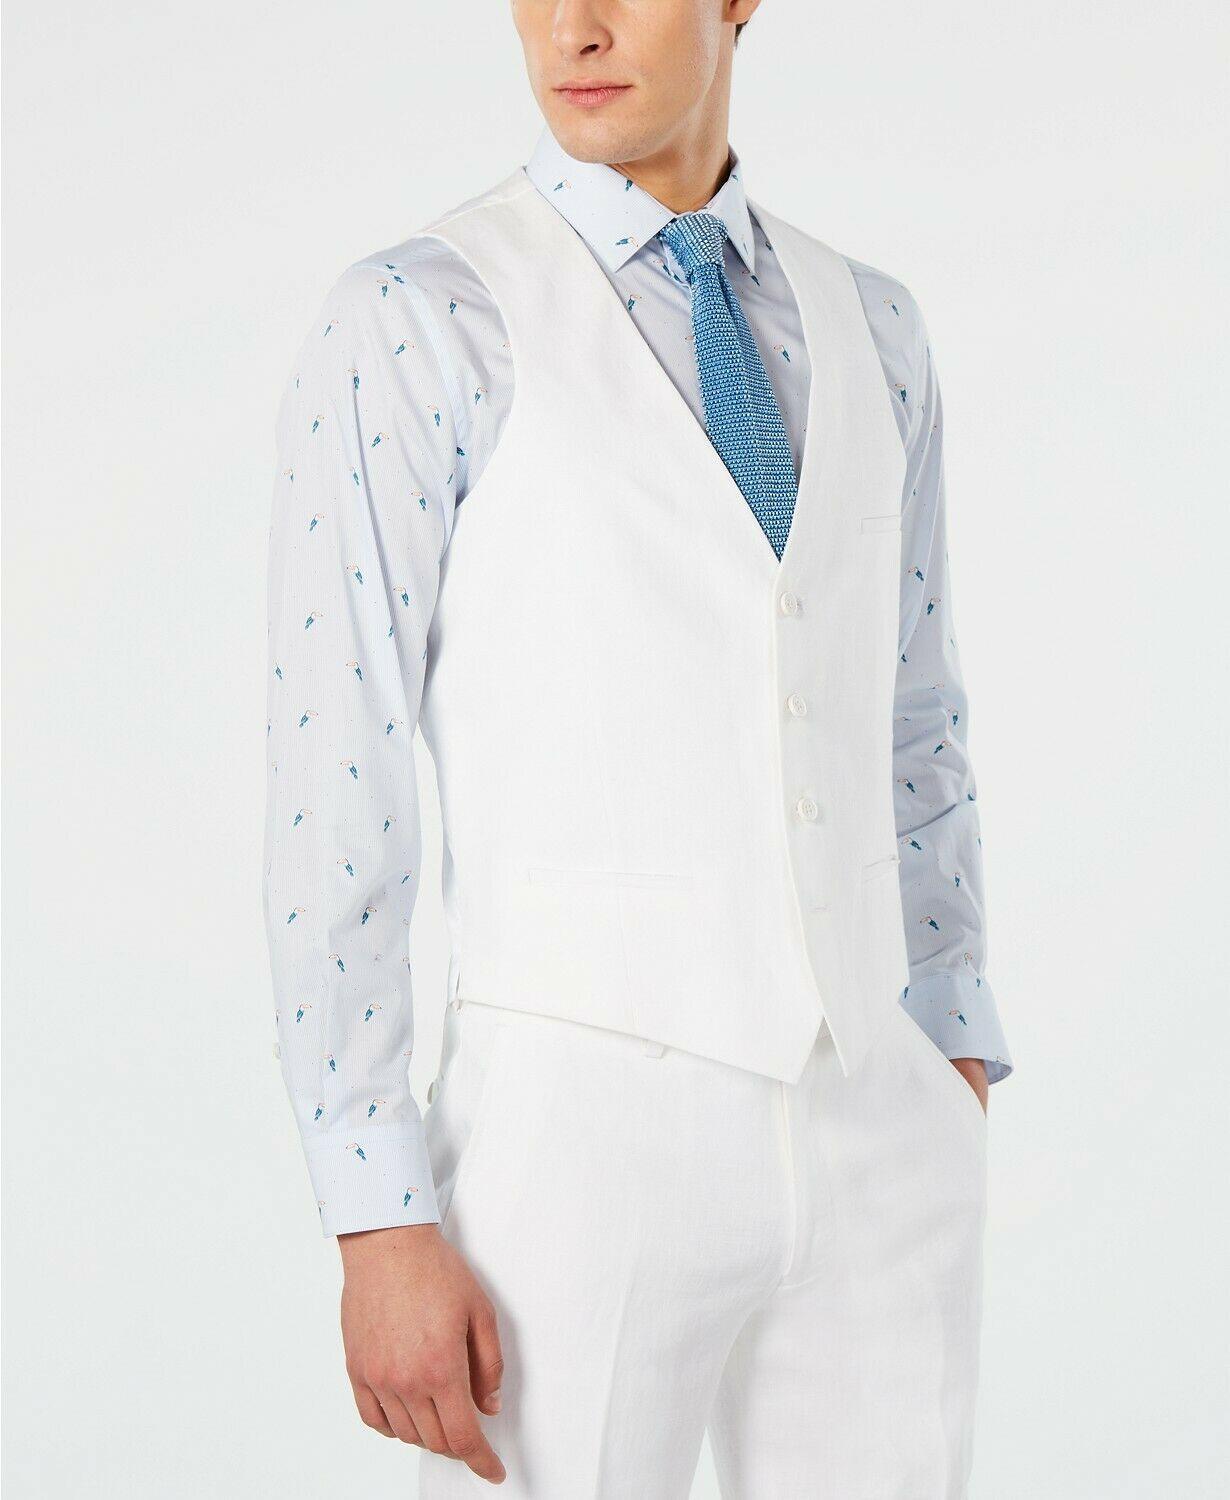 Bar III Men's Slim-Fit Solid White Suit Vest Small Linen - Bristol Apparel Co